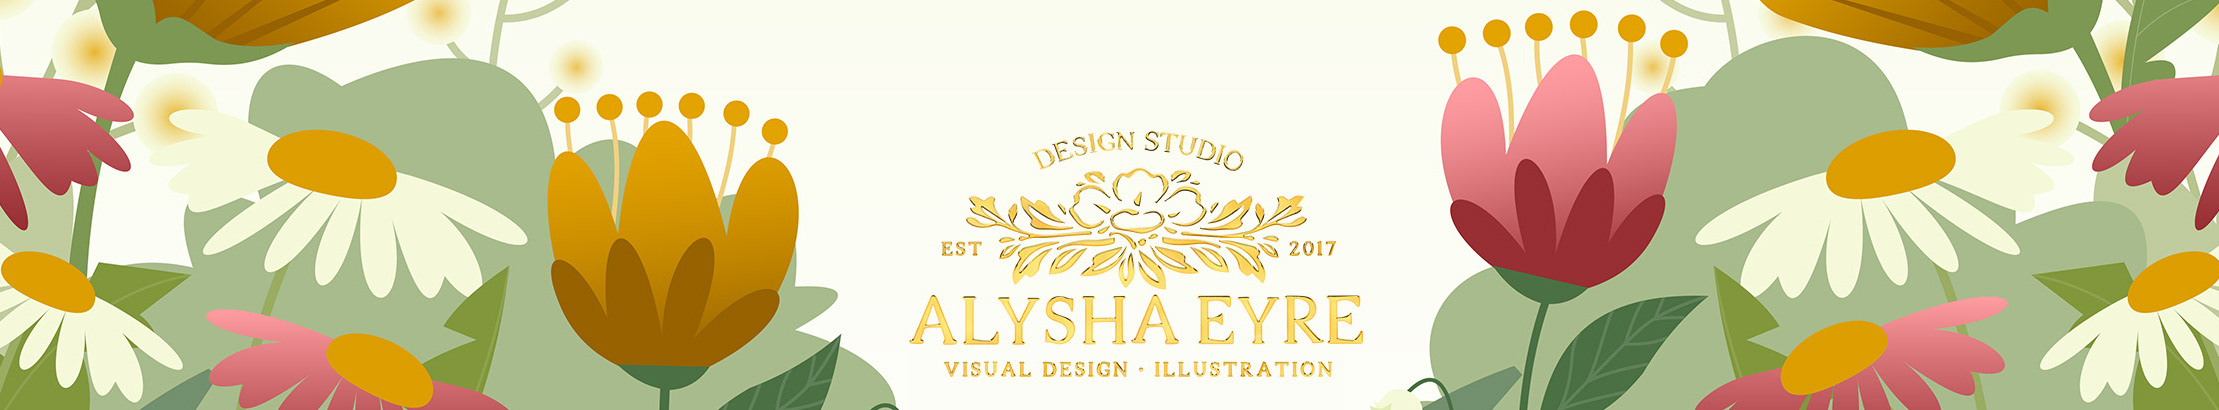 Alysha Eyre's profile banner